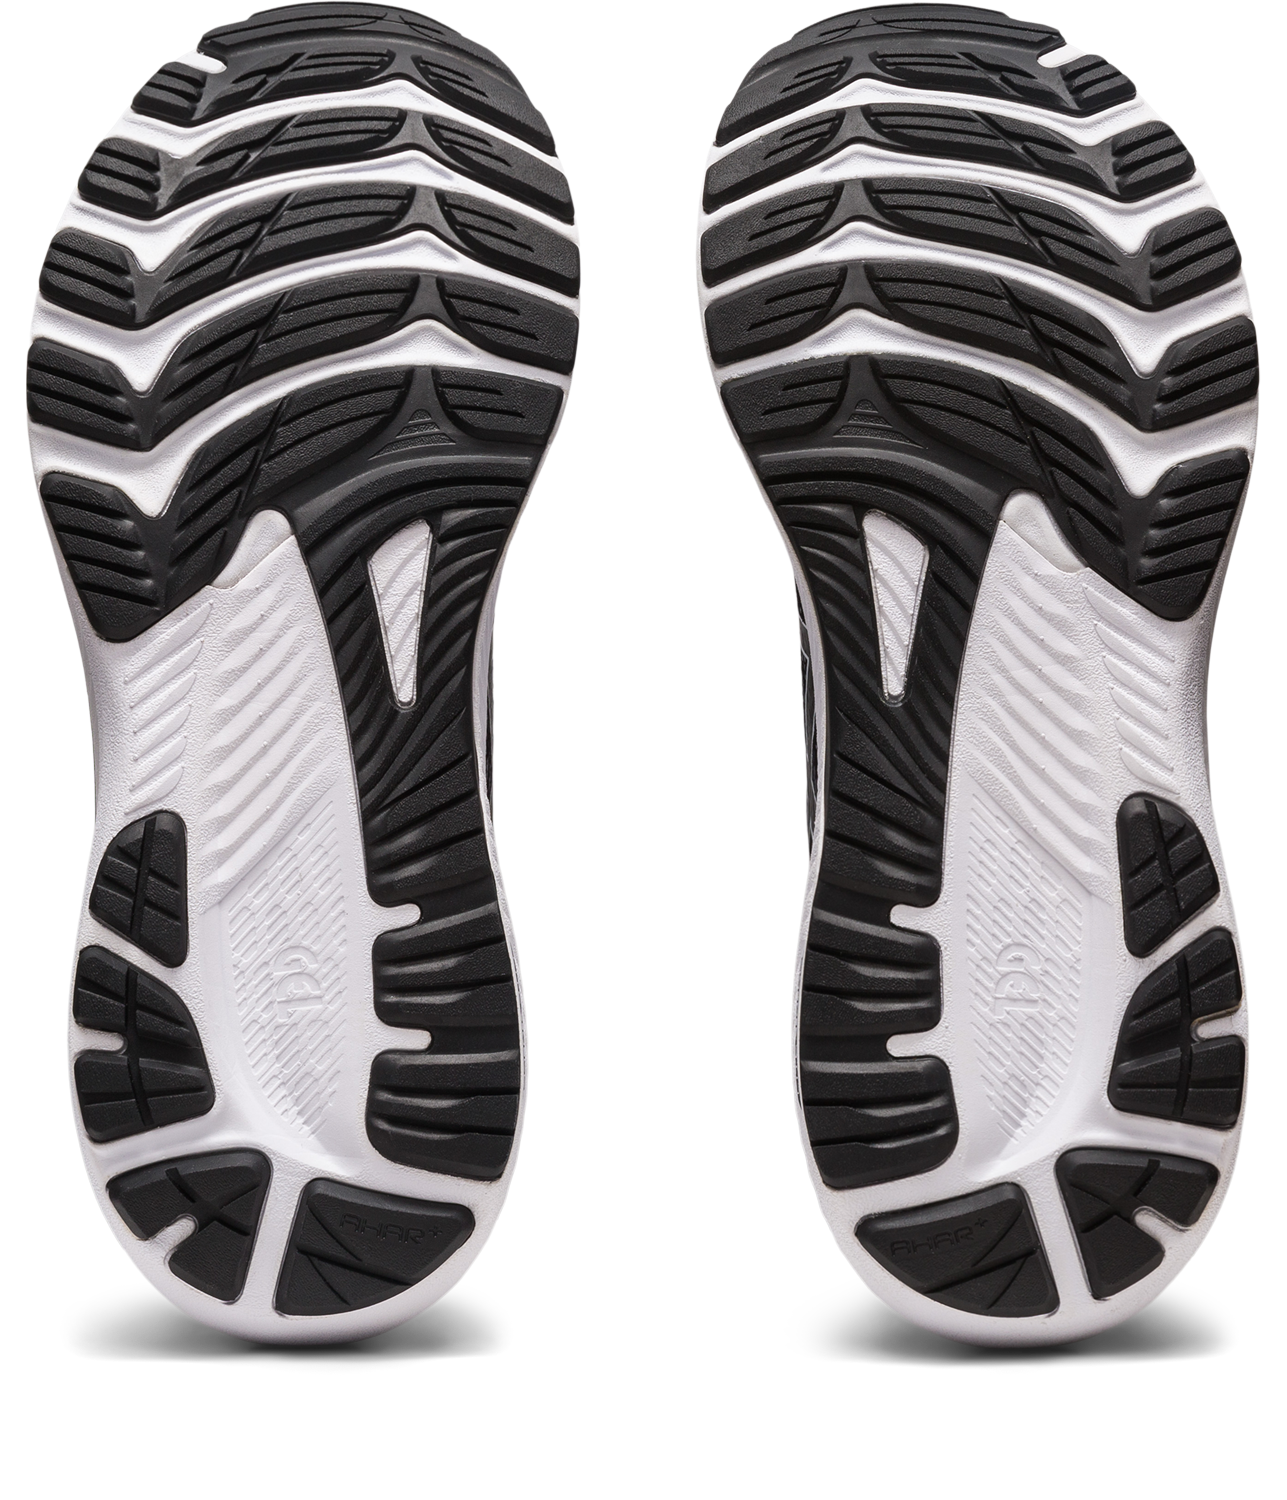 Asics Women's Gel-Kayano 29 Running Shoes in Black/White